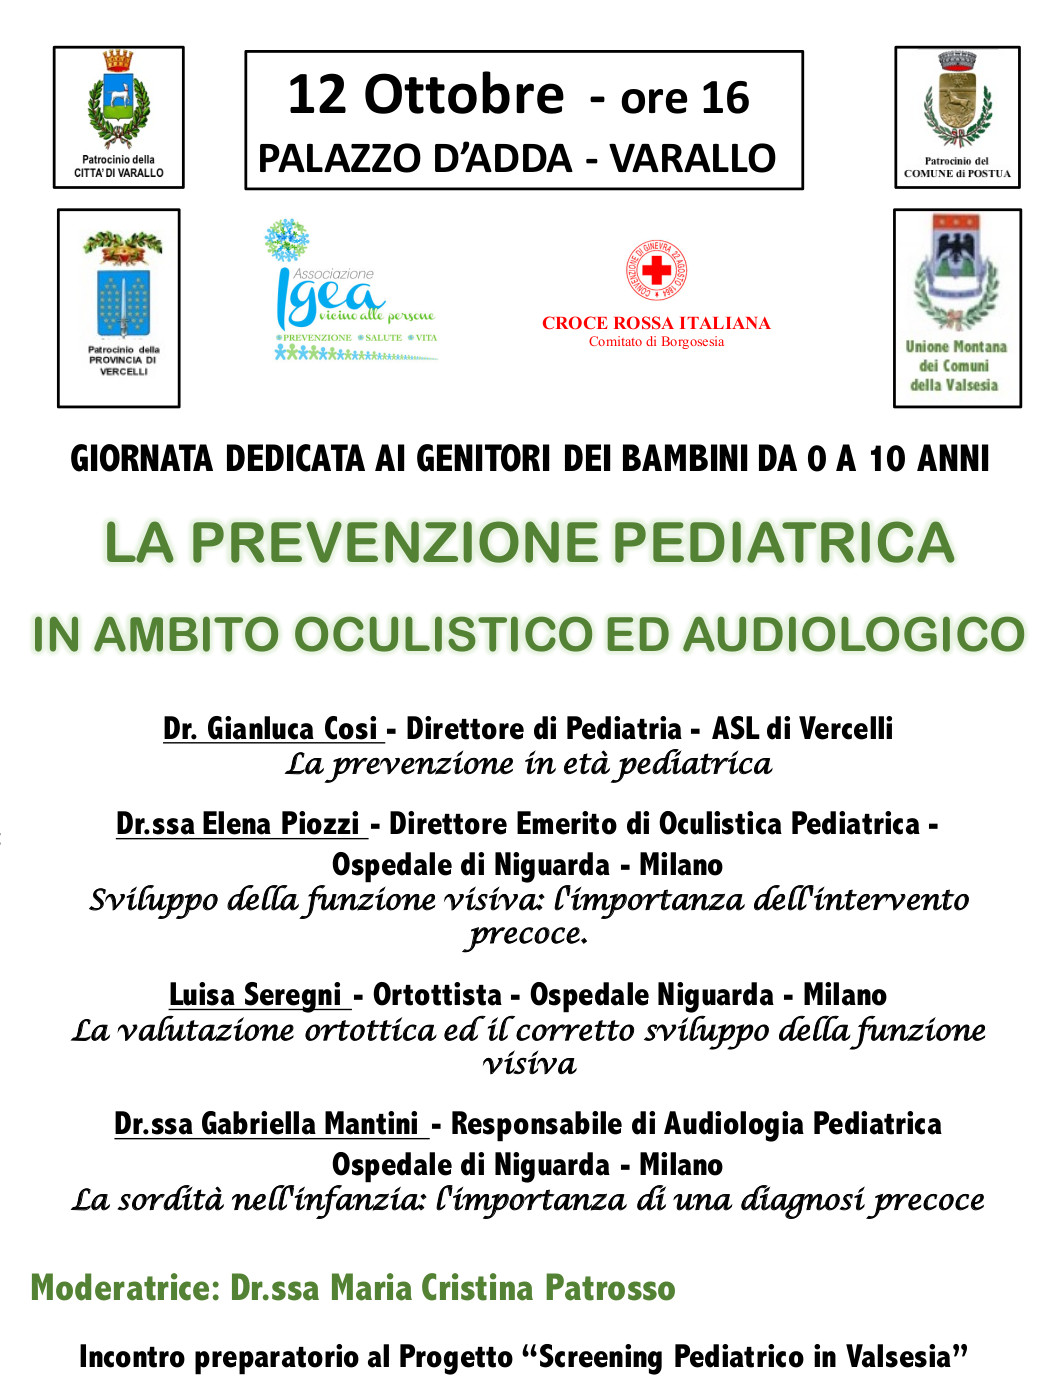 Prevenzione in Pediatria.JPG